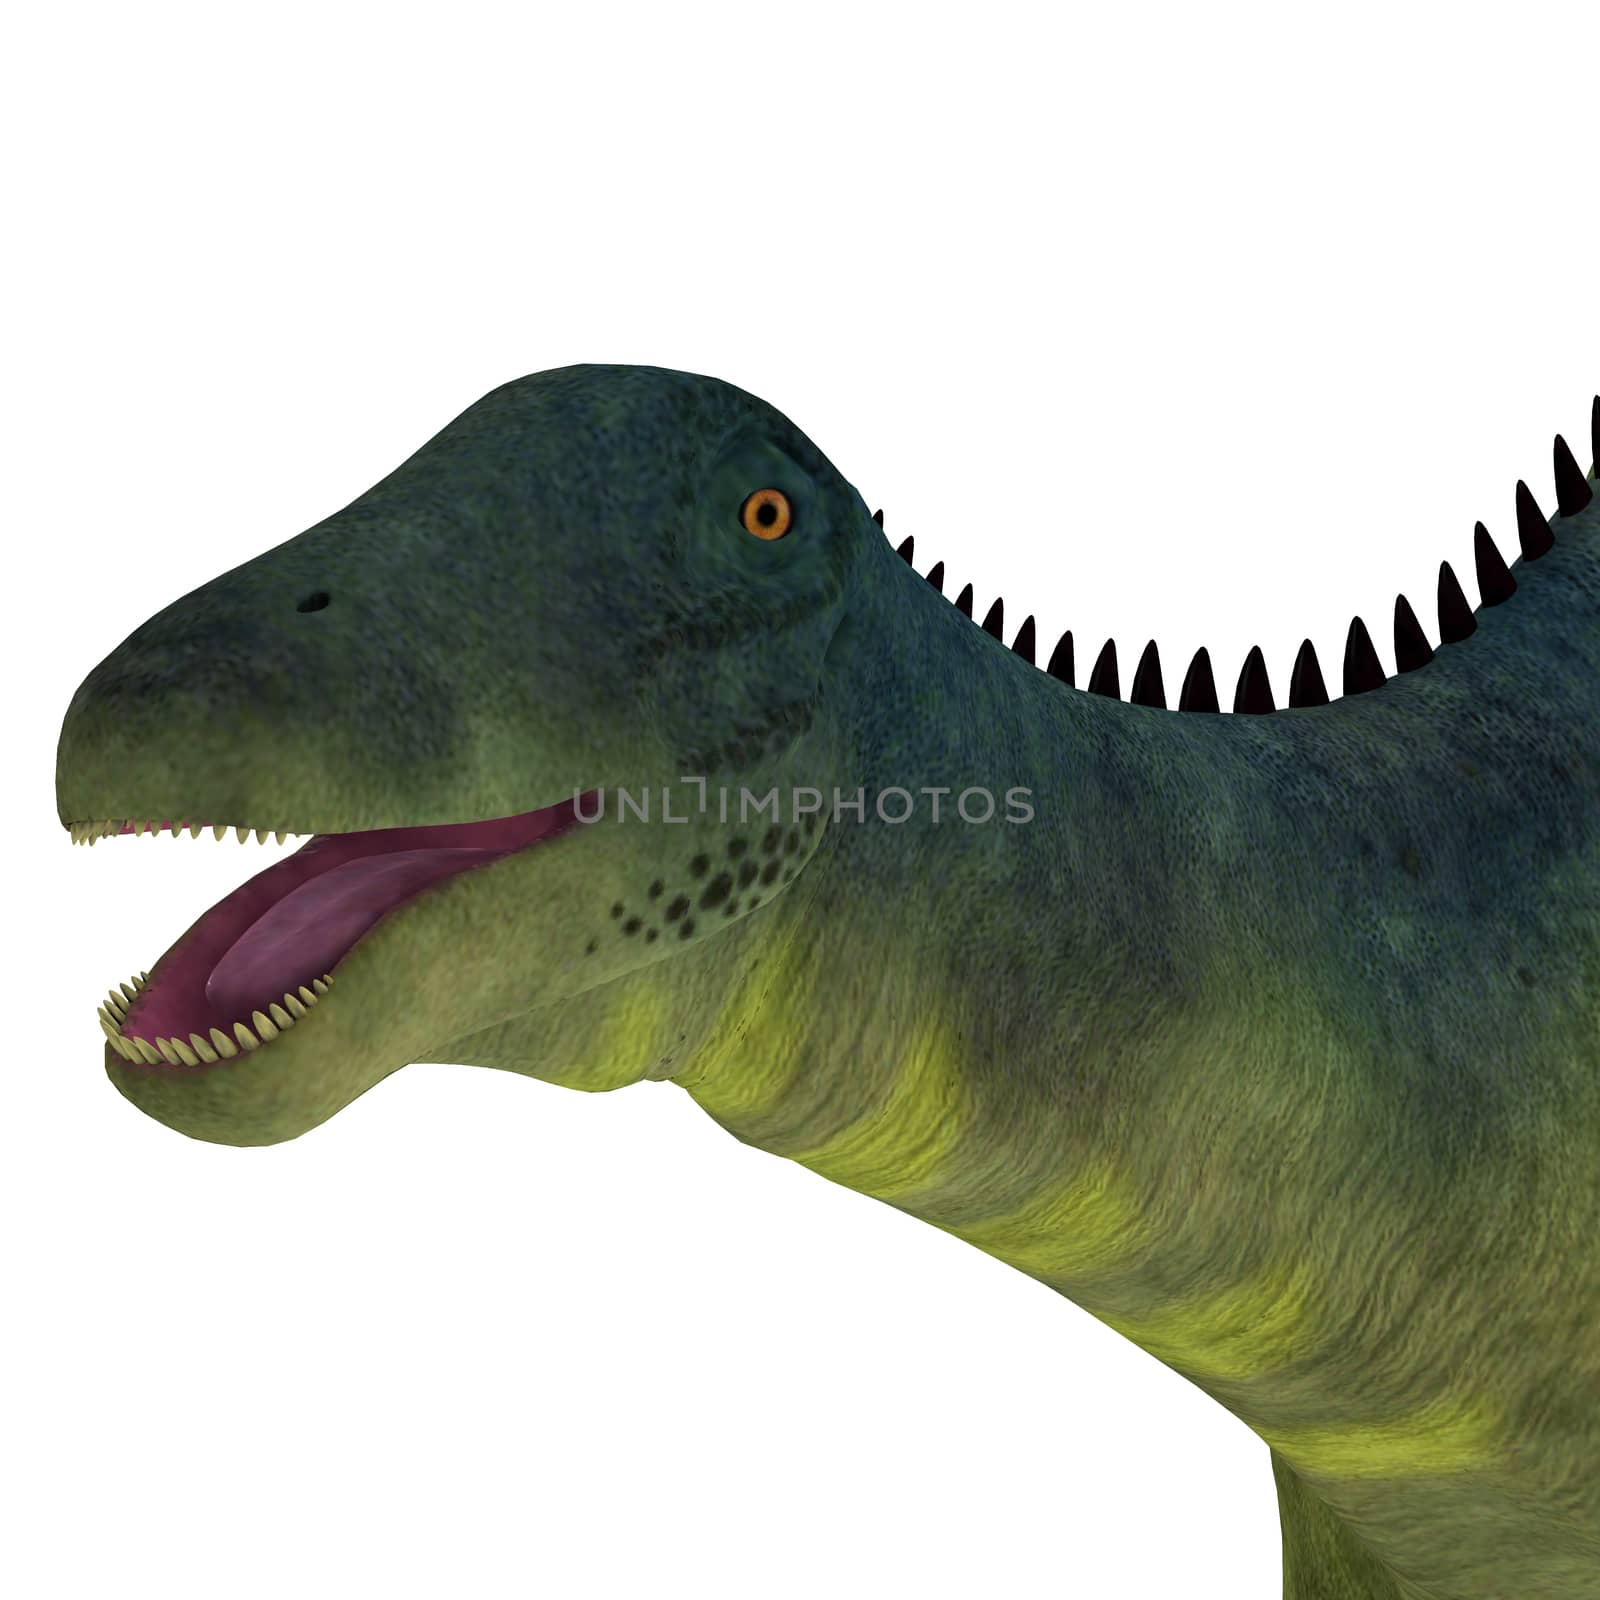 Brachytrachelopan was a herbivorous sauropod dinosaur that lived in Argentina during the Jurassic Period.